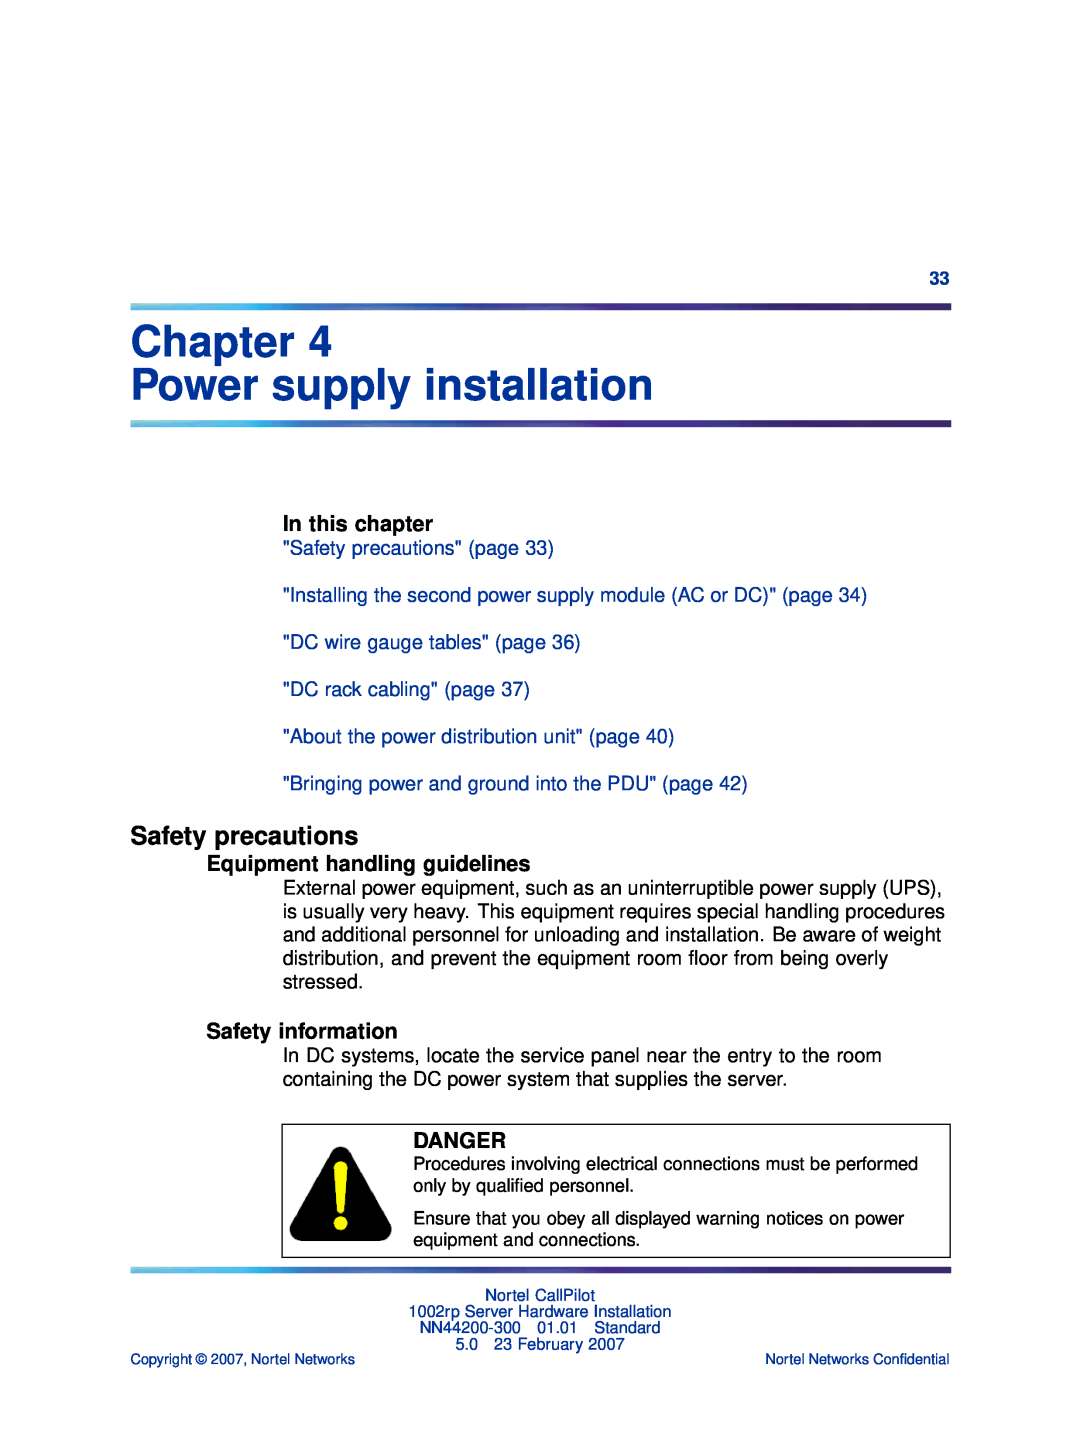 Nortel Networks NN44200-300 Chapter Power supply installation, Safety precautions, Equipment handling guidelines, Danger 